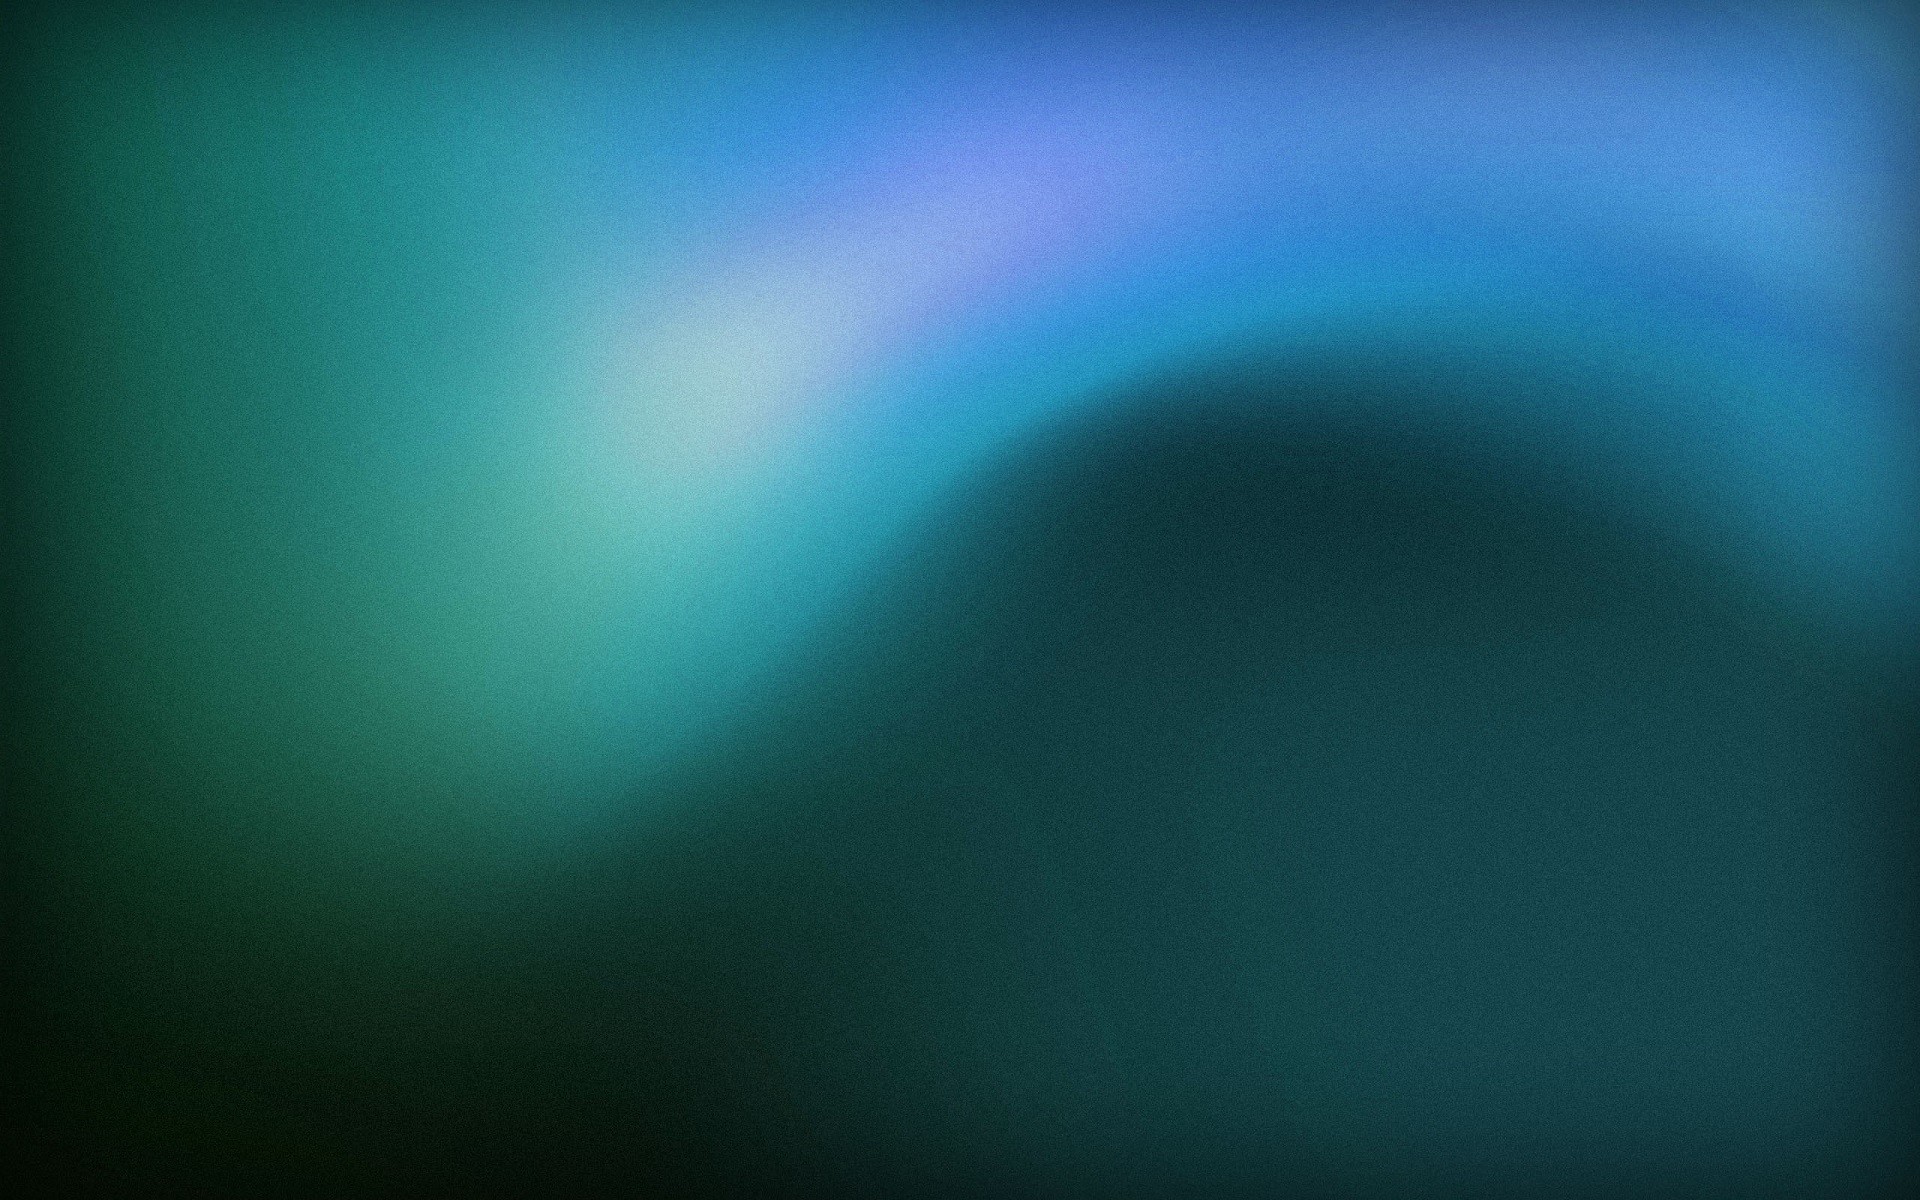 ubuntu gnome wallpaper,blue,green,turquoise,sky,aqua